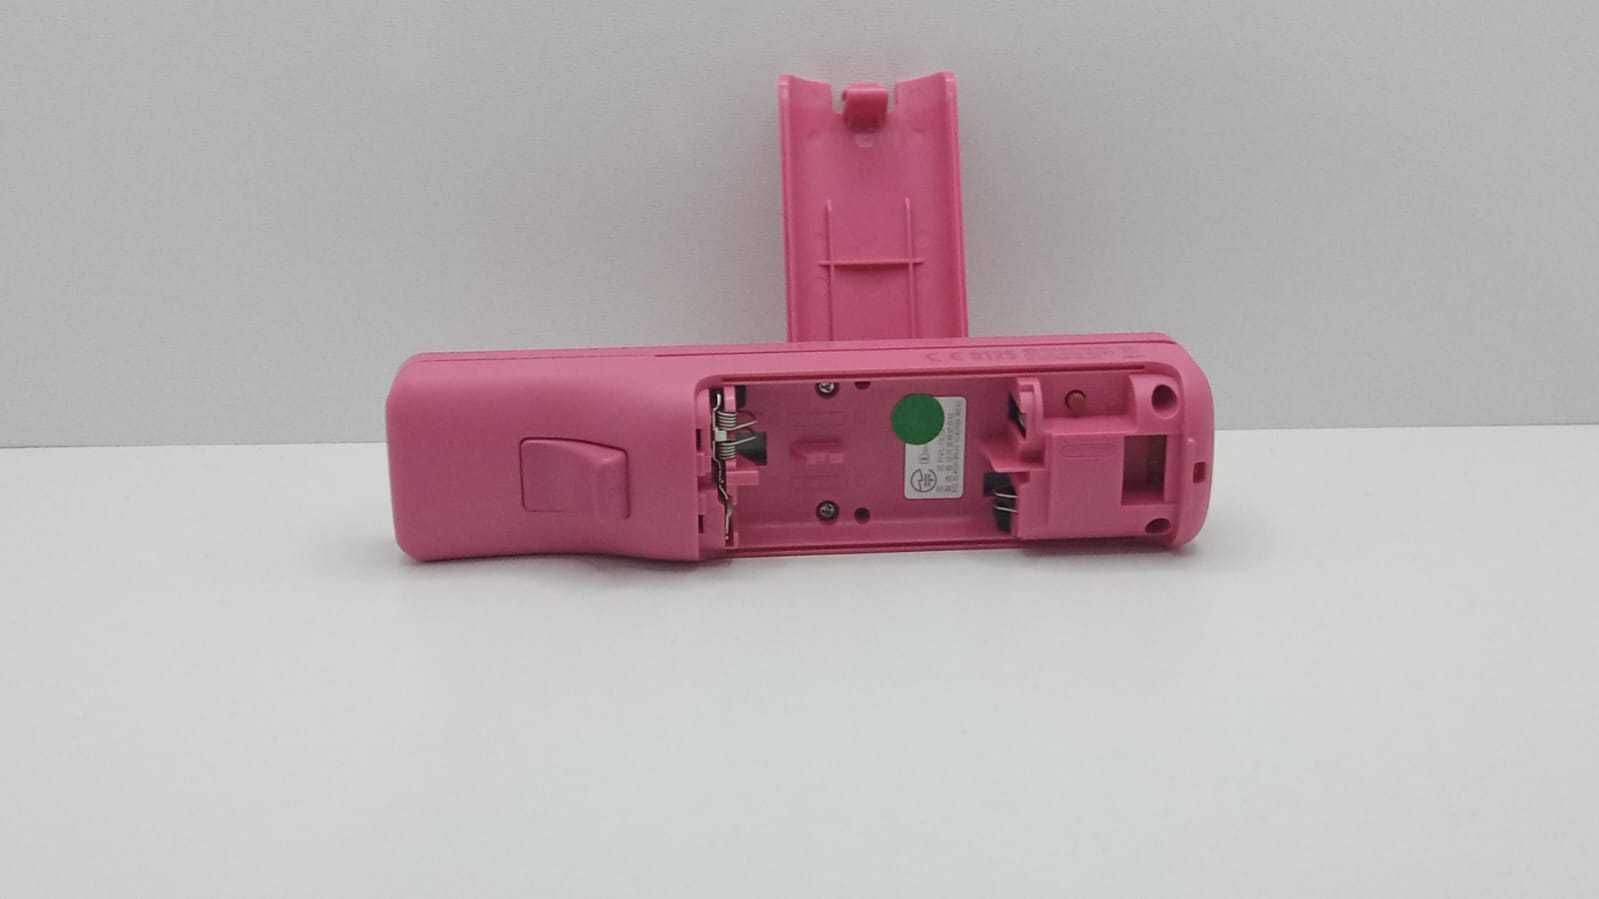 Nintendo Wii Remote - Син - Розов  - Оригинален Nintendo